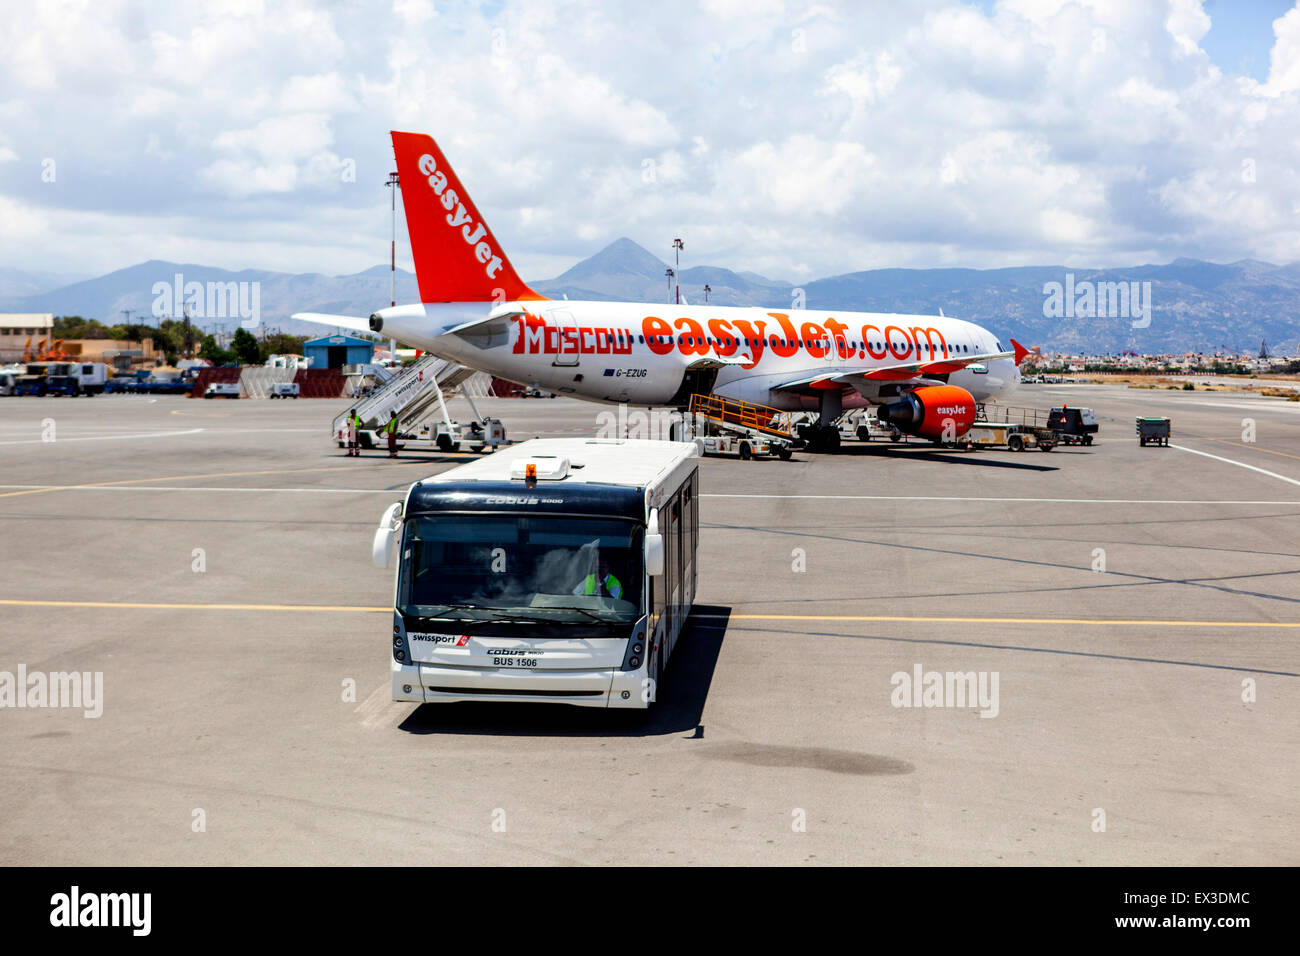 EasyJet Airlines plane Airbus A319 on the runway at Nikos Kazantzakis International Airport in Heraklion Crete island Greece Stock Photo